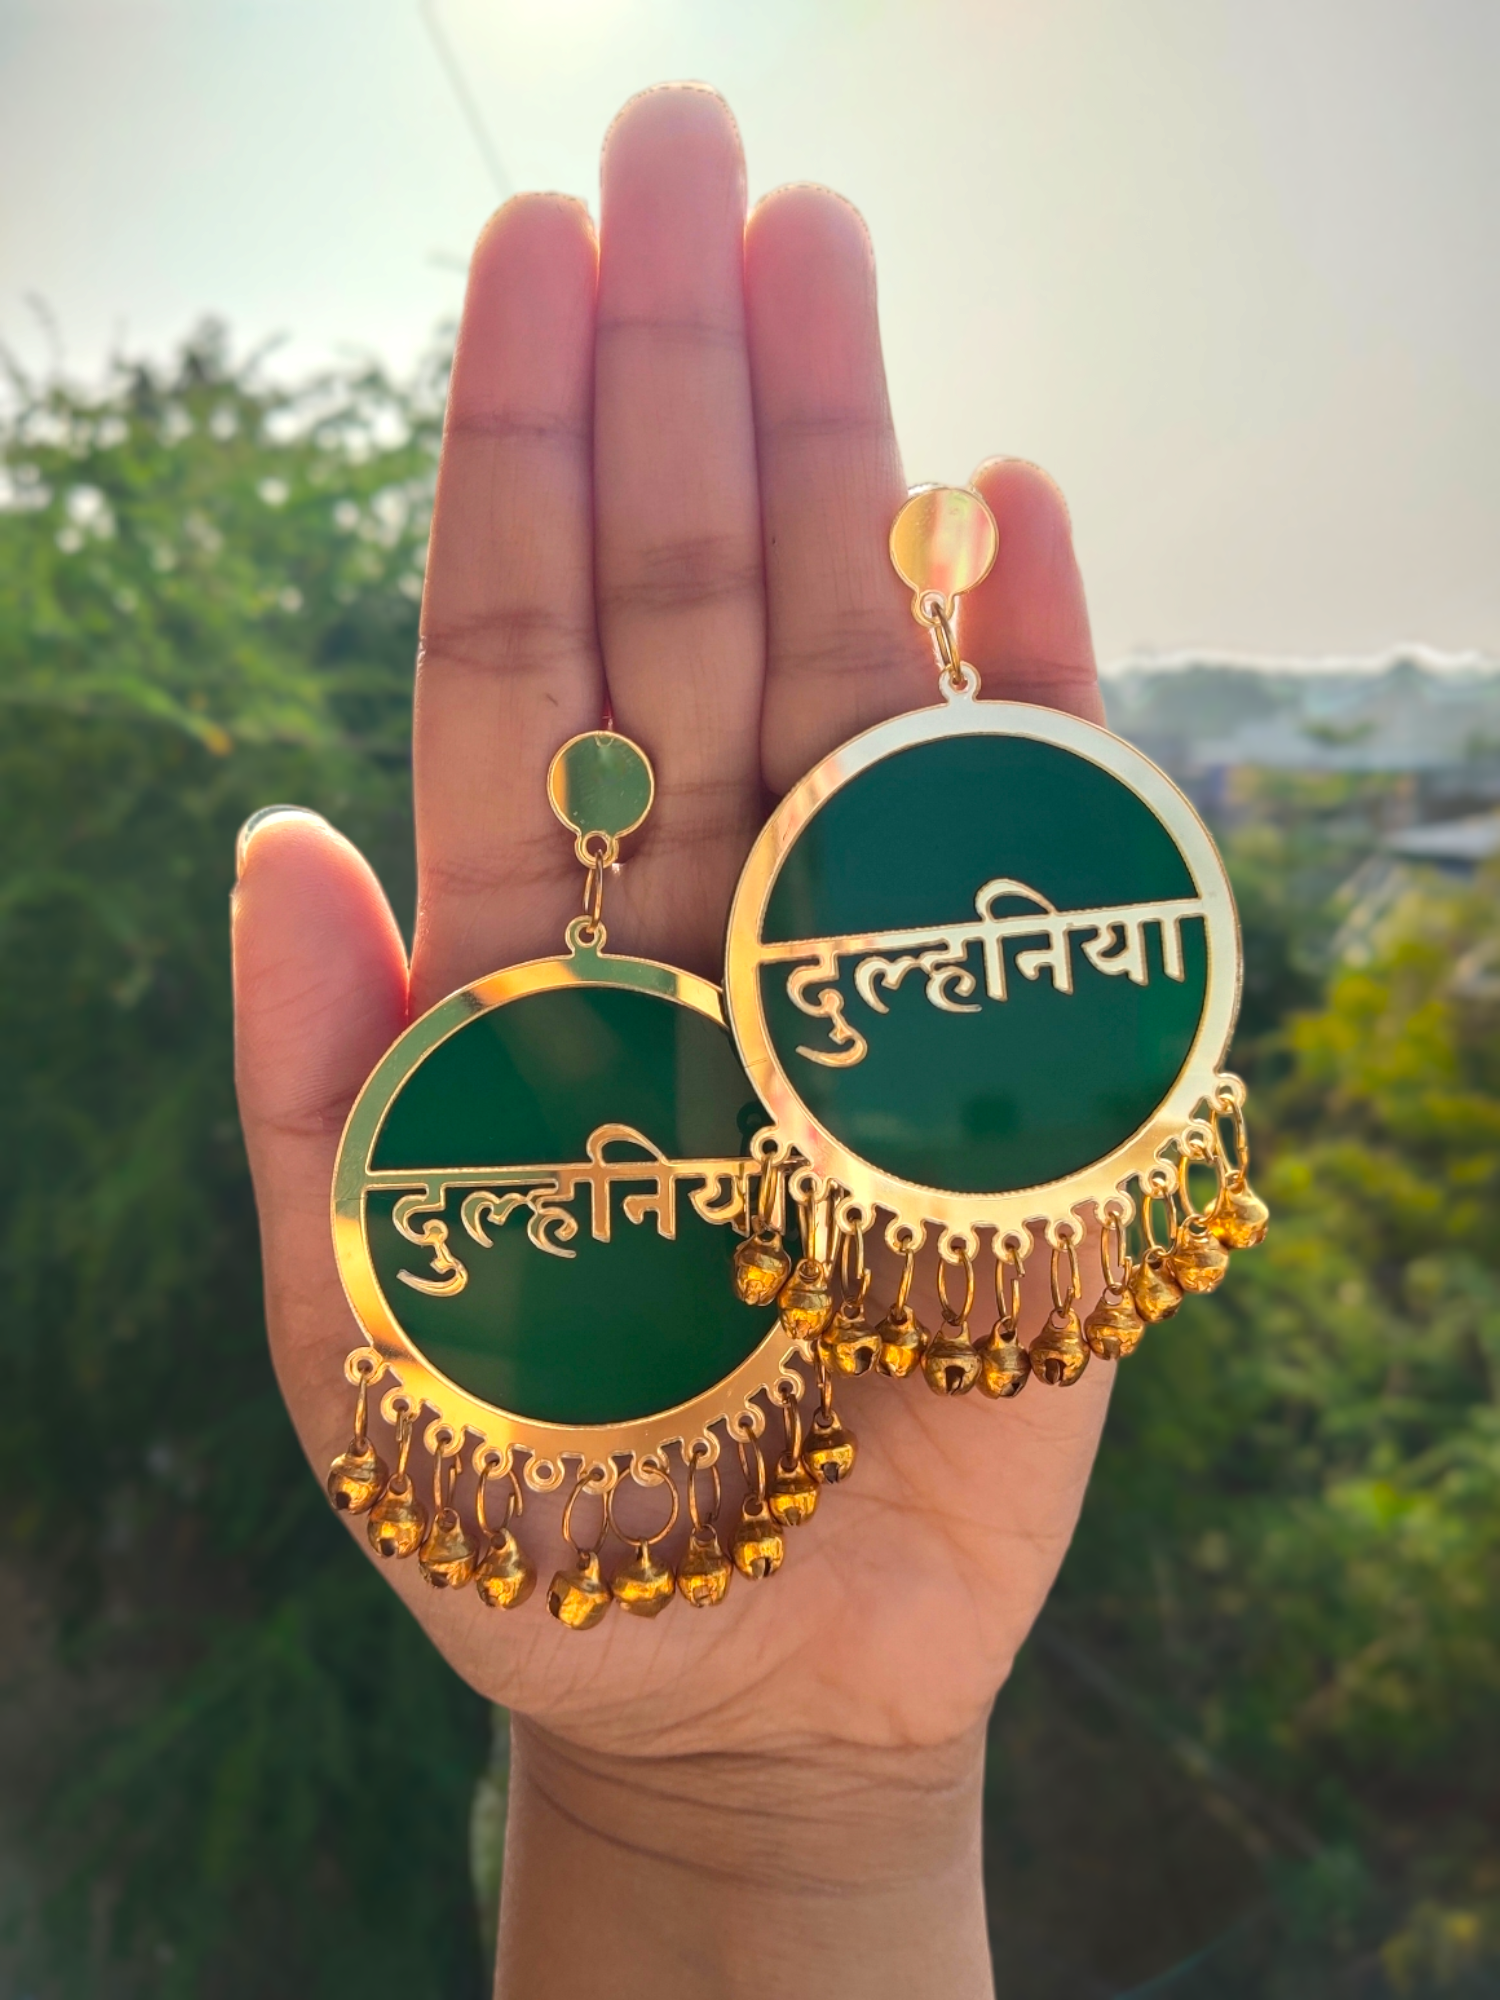 Dulhaniya Earrings for Haldi, Mehndi. Dulhaniya text written in earrings in Green color